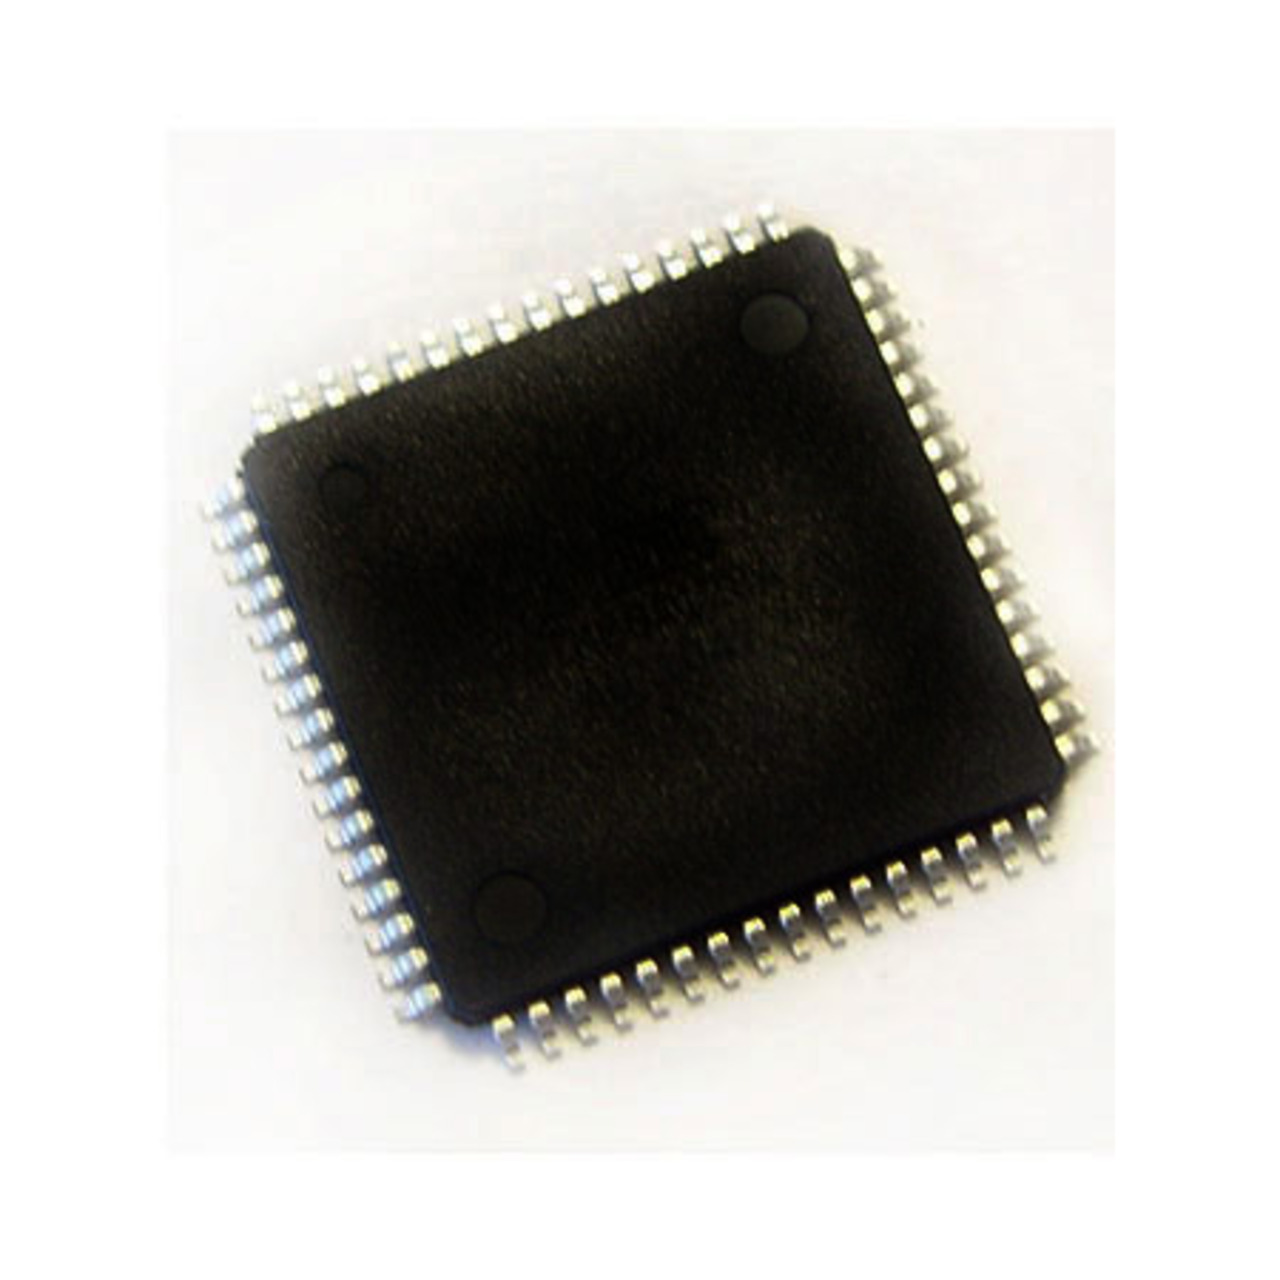 Atmel Mikrocontroller AT32UC3B0256-A2UT- TQFP-64 unter Komponenten